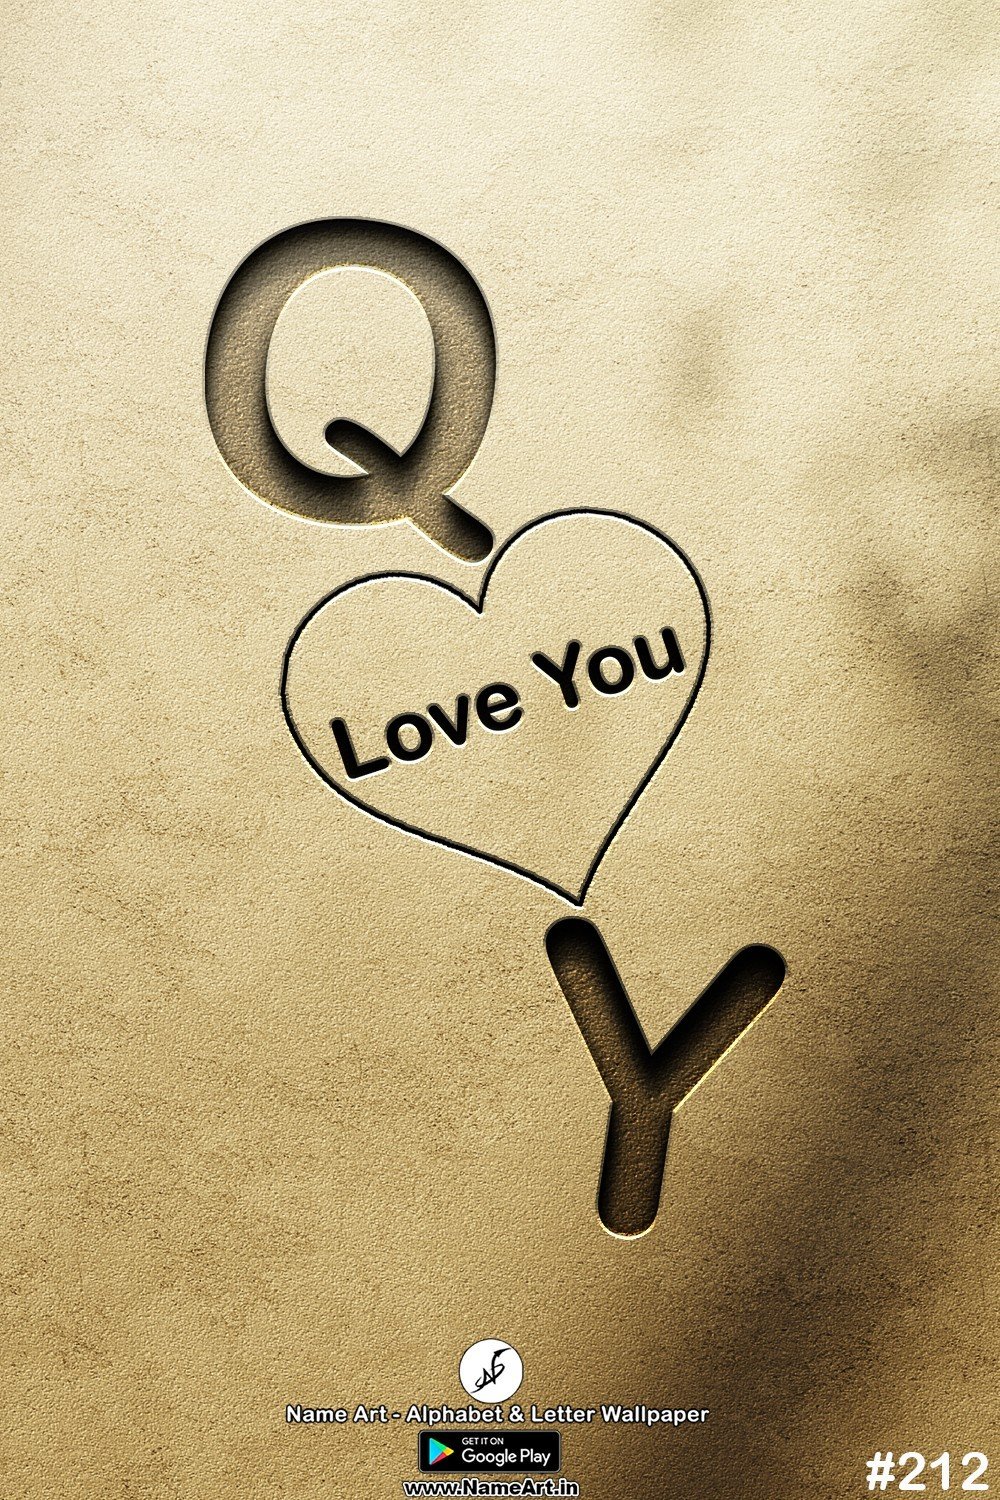 QY | Whatsapp Status DP QY | QY Love Status Cute Couple Whatsapp Status DP !! | New Whatsapp Status DP QY Images |